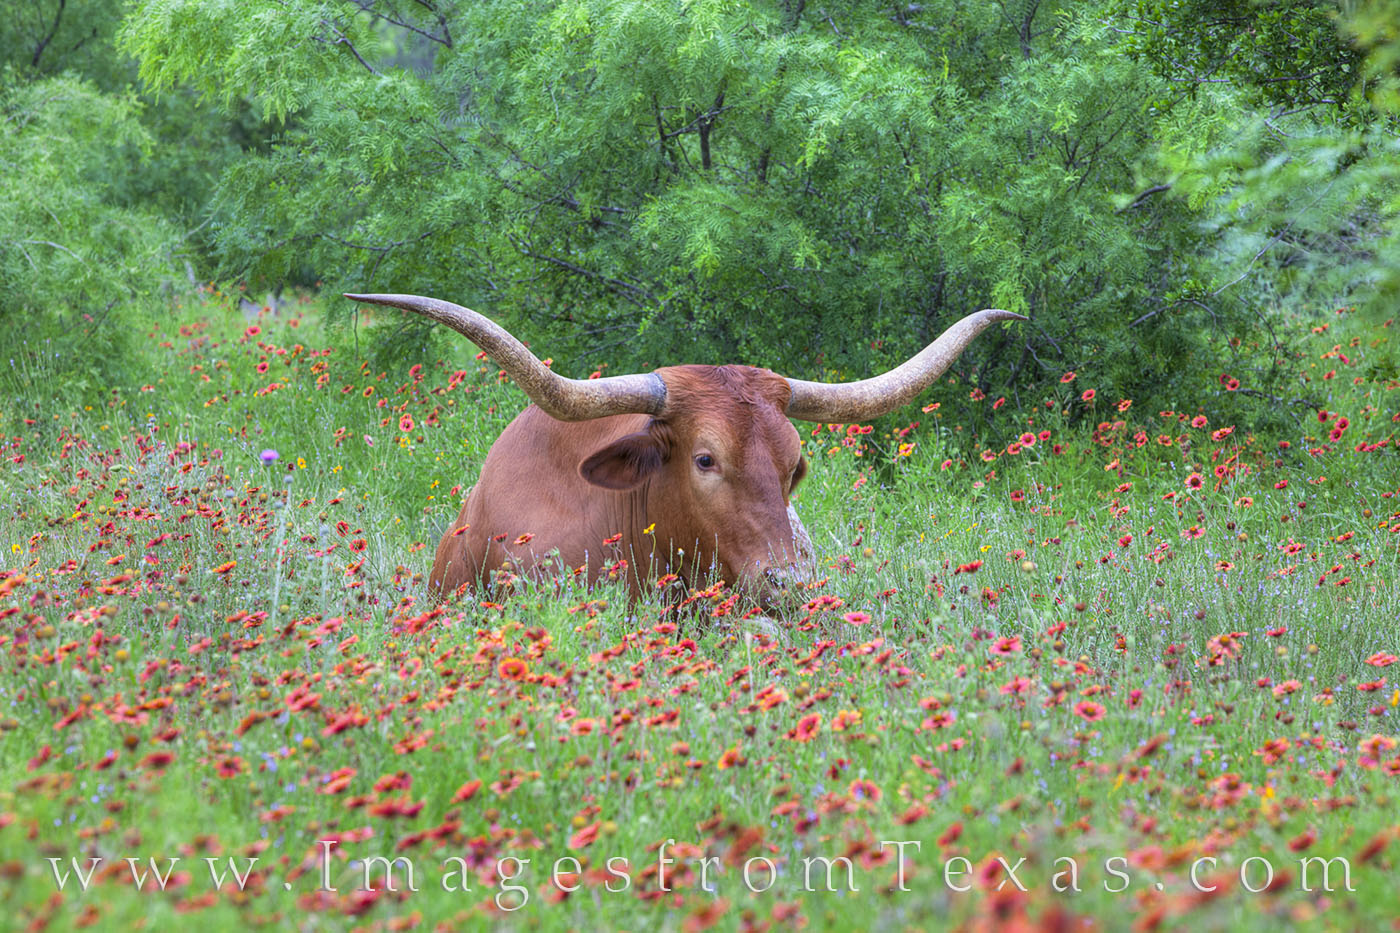 A Texas longhorn enjoys a morning rest in a field of firewheels, on of Texas' prettiest red wildflowers.